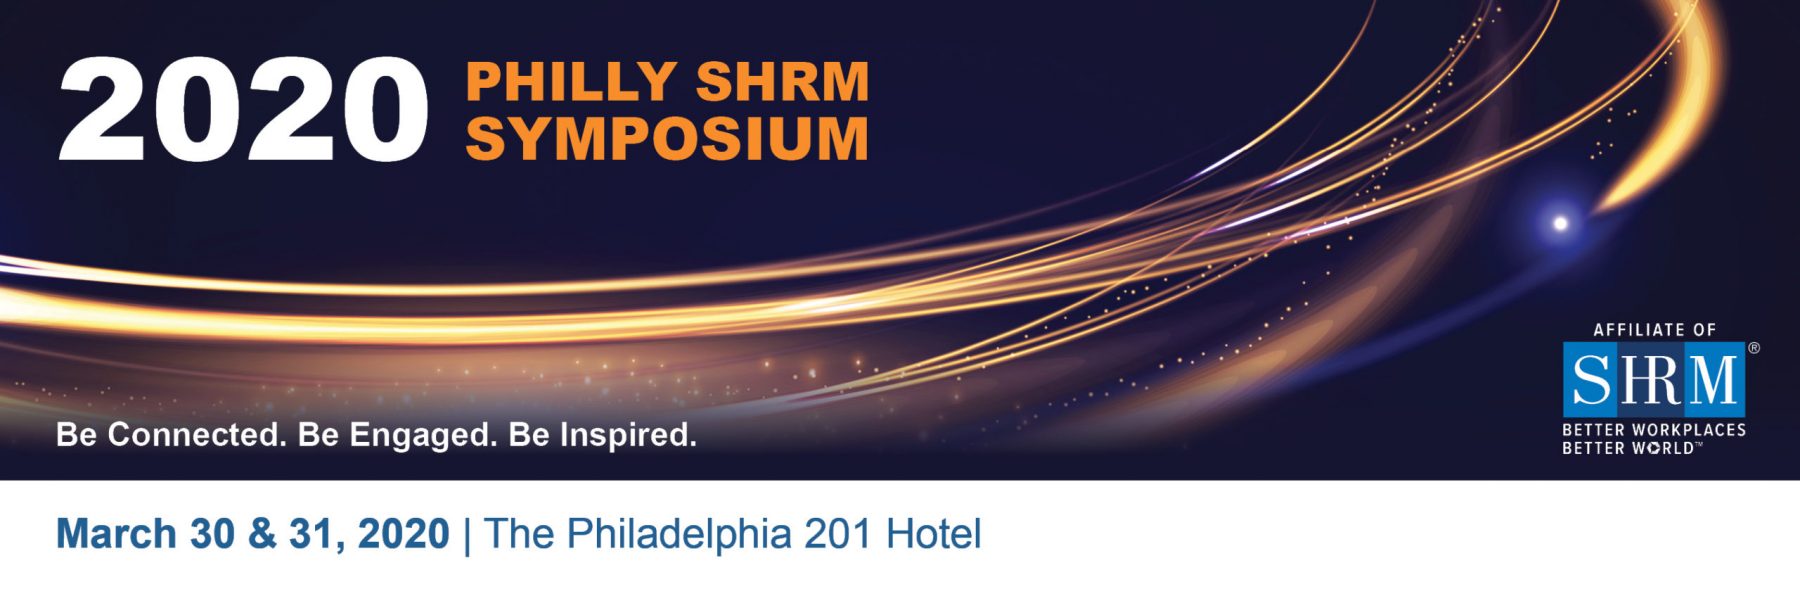 2020 Philly SHRM Symposium - Tri-State HRMA